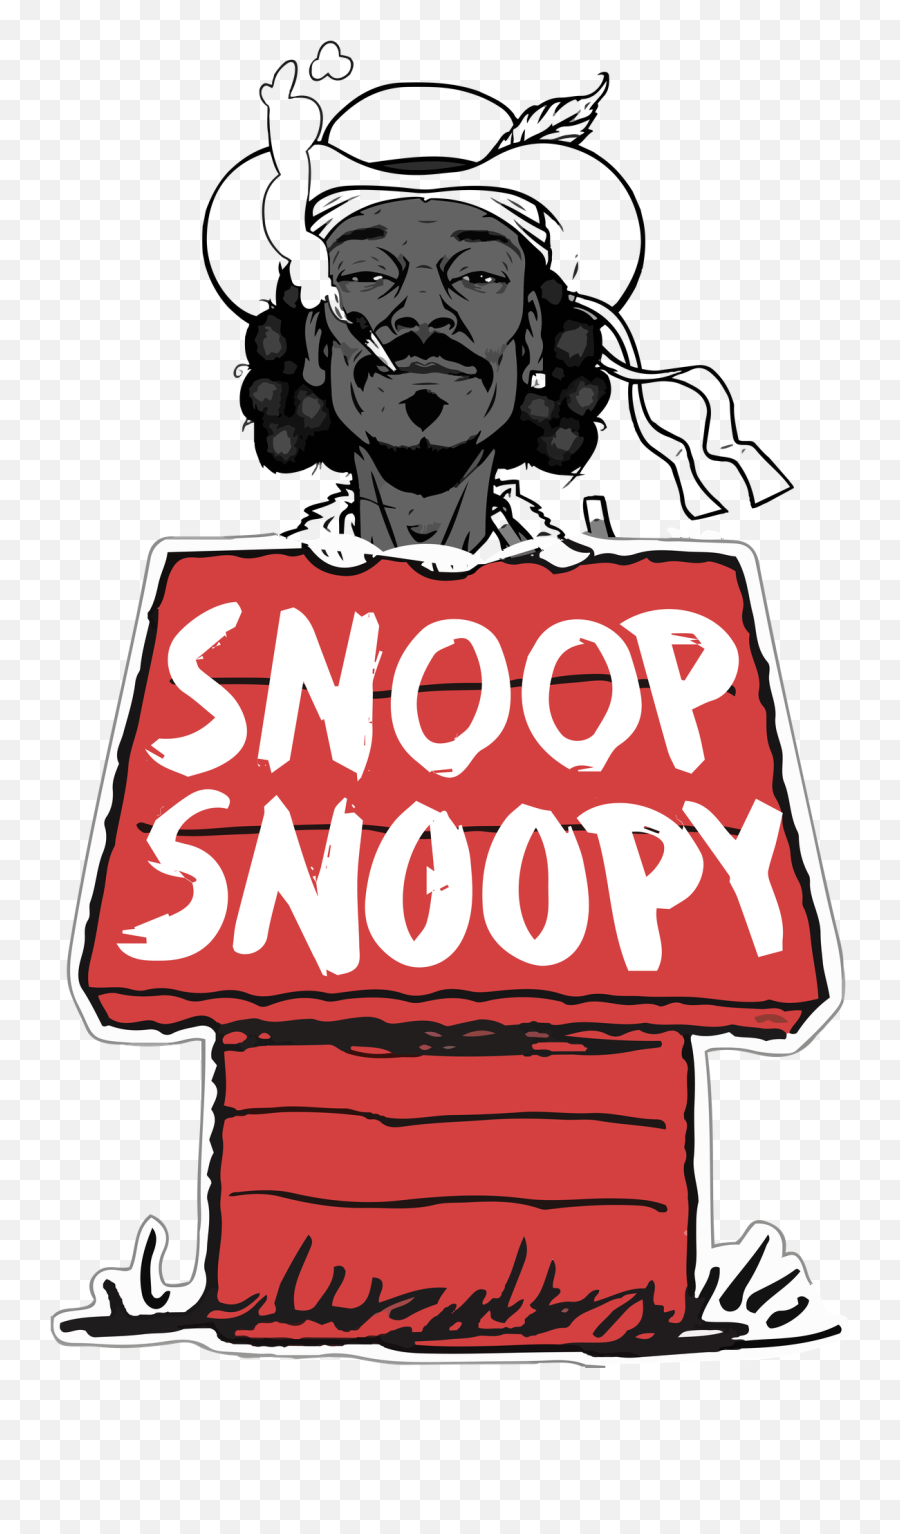 Snoop Dogg Snoopy T Shirts Snoop Dogg Snoopy T Shirt Wattpad Snoopy And Snoop Dogg Png Snoop Dogg Png Free Transparent Png Images Pngaaa Com